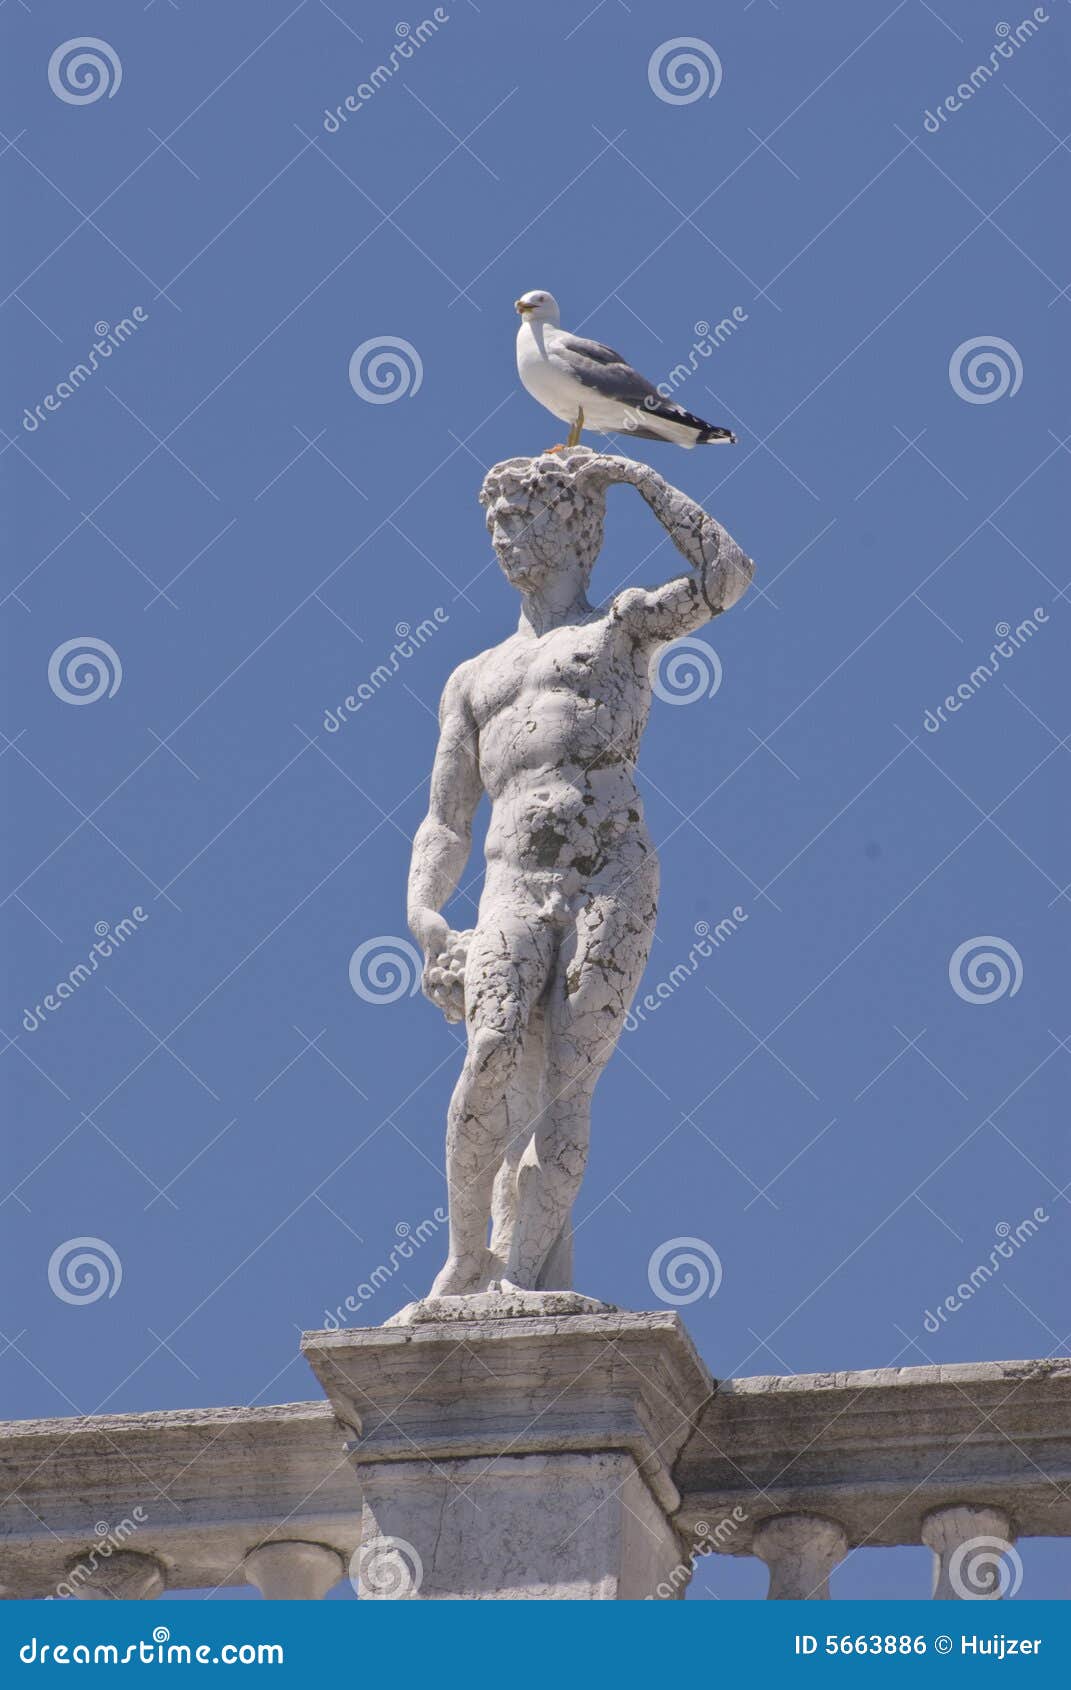 statue on the biblioteca nazionale marciana